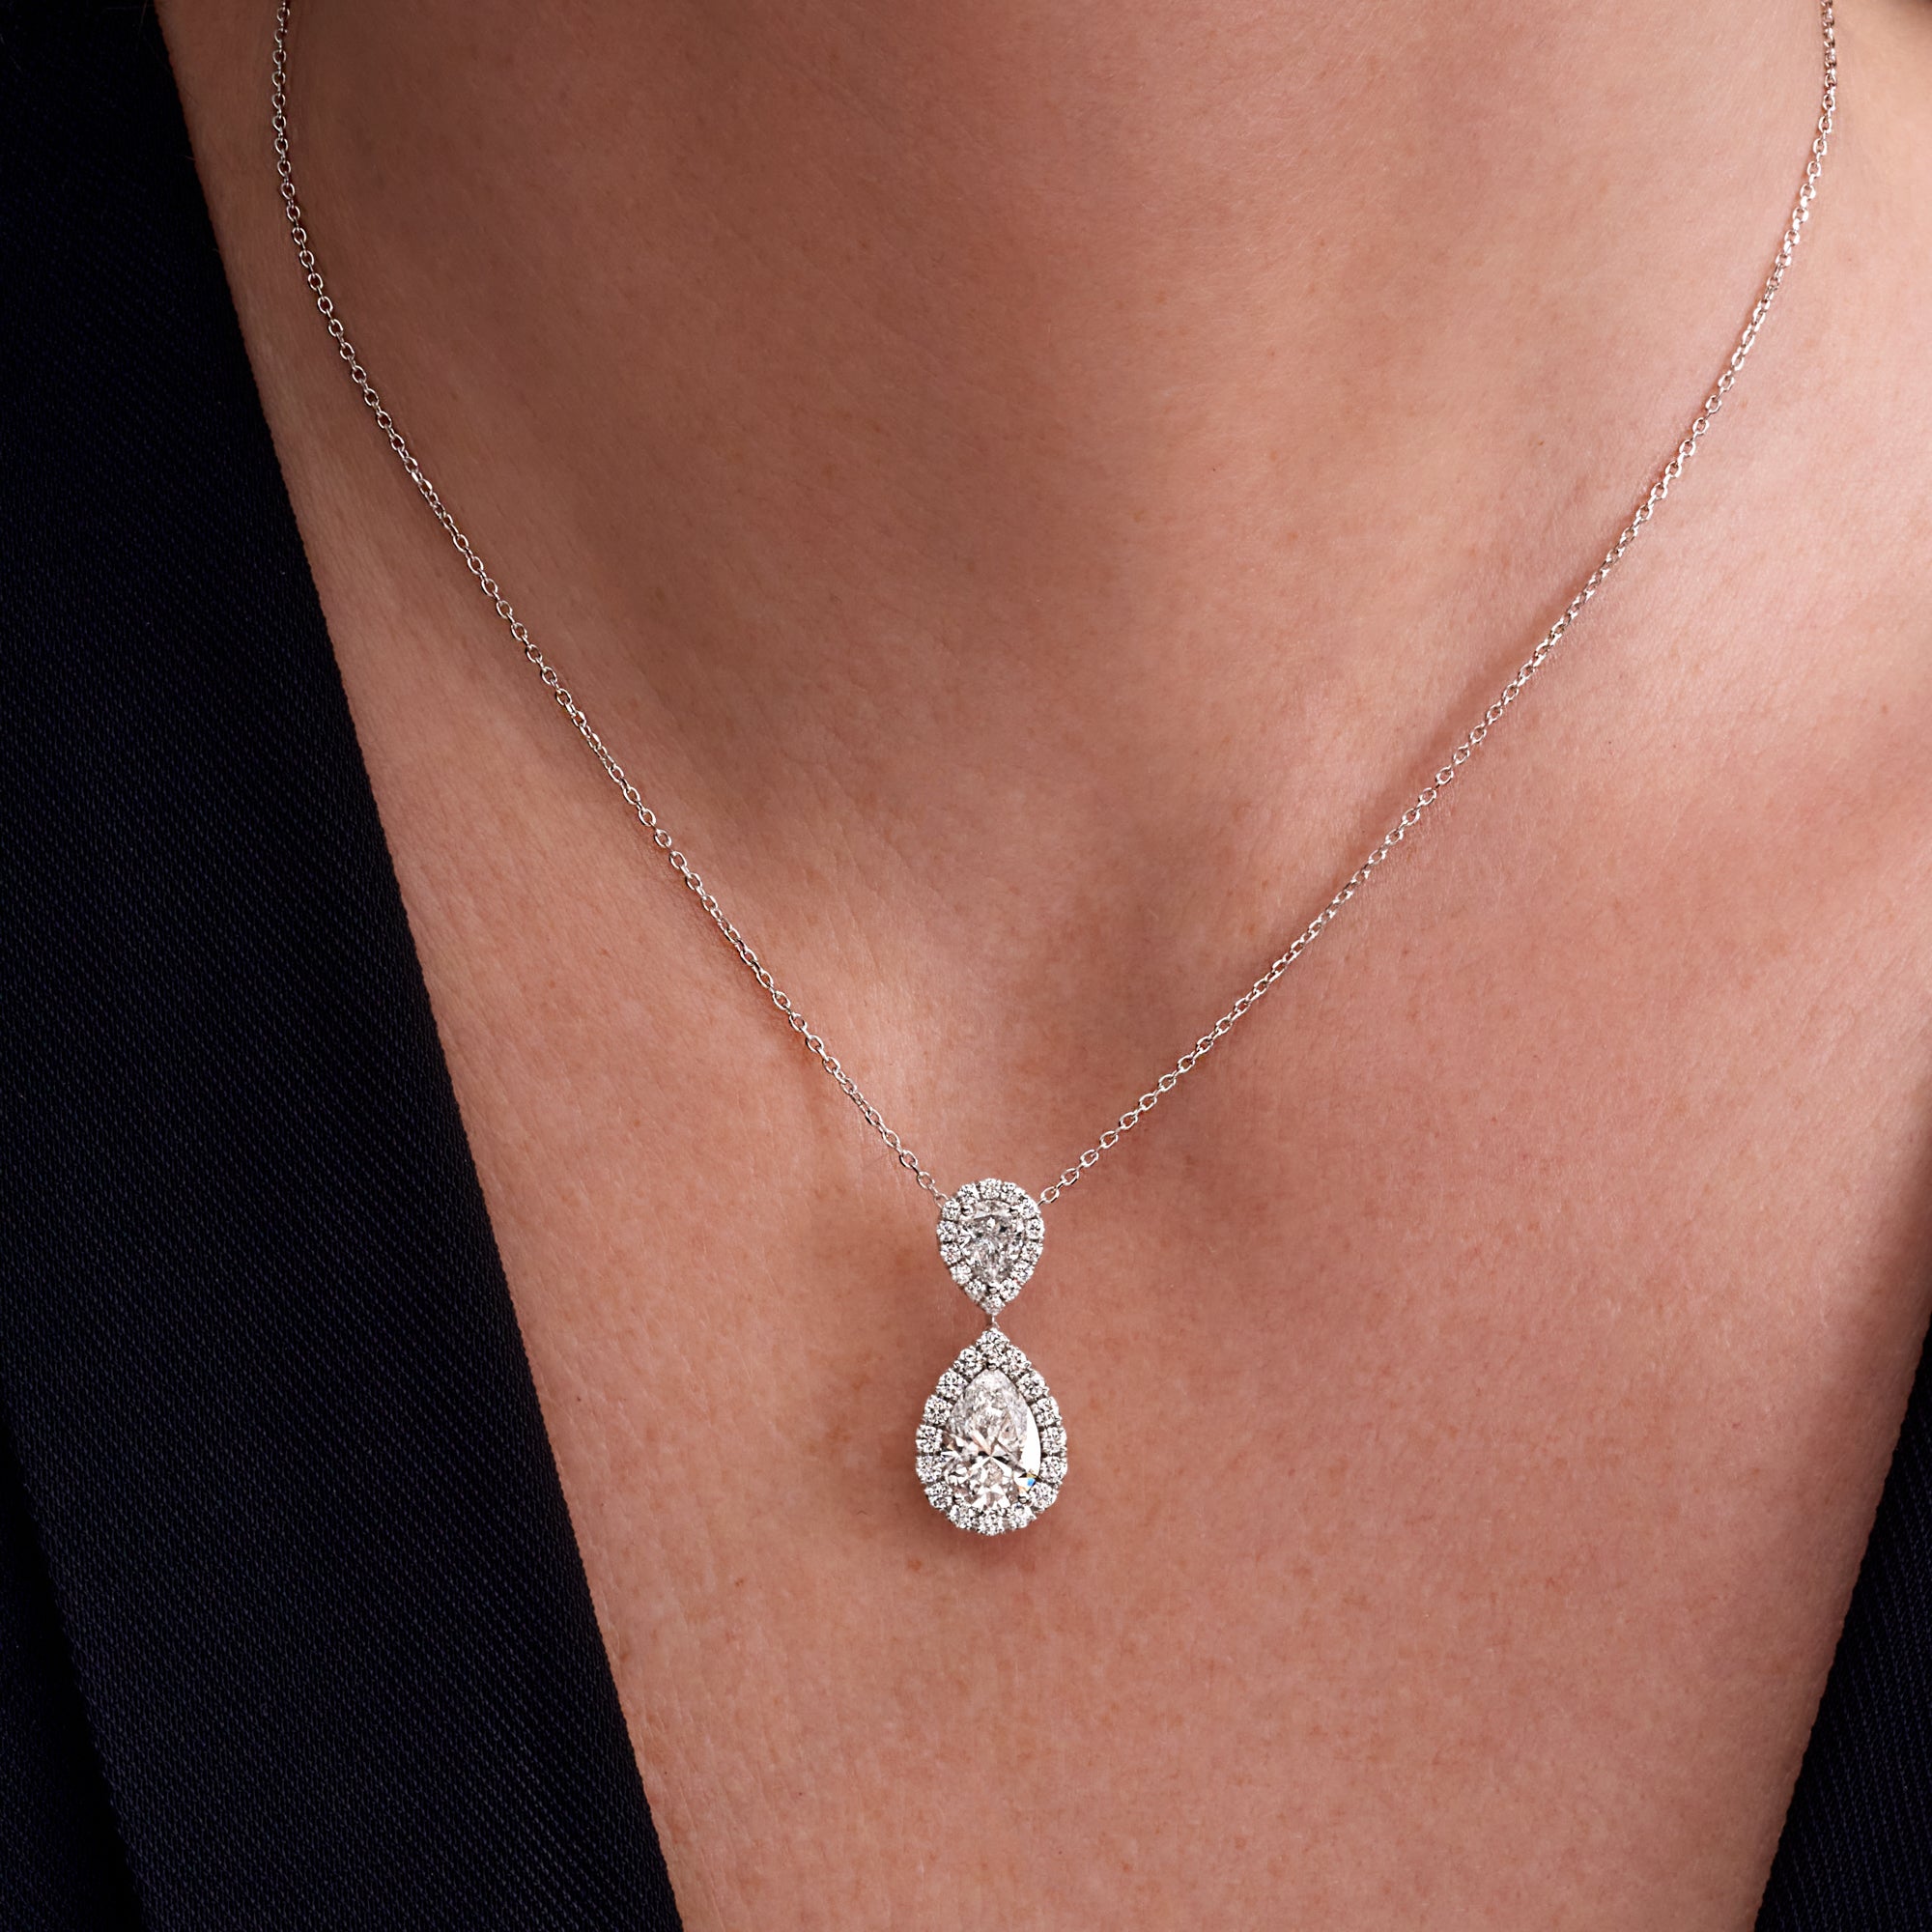 3.06 CT. Pear Cut and Round Brilliant Diamond Pendant Necklace in 14K White Gold